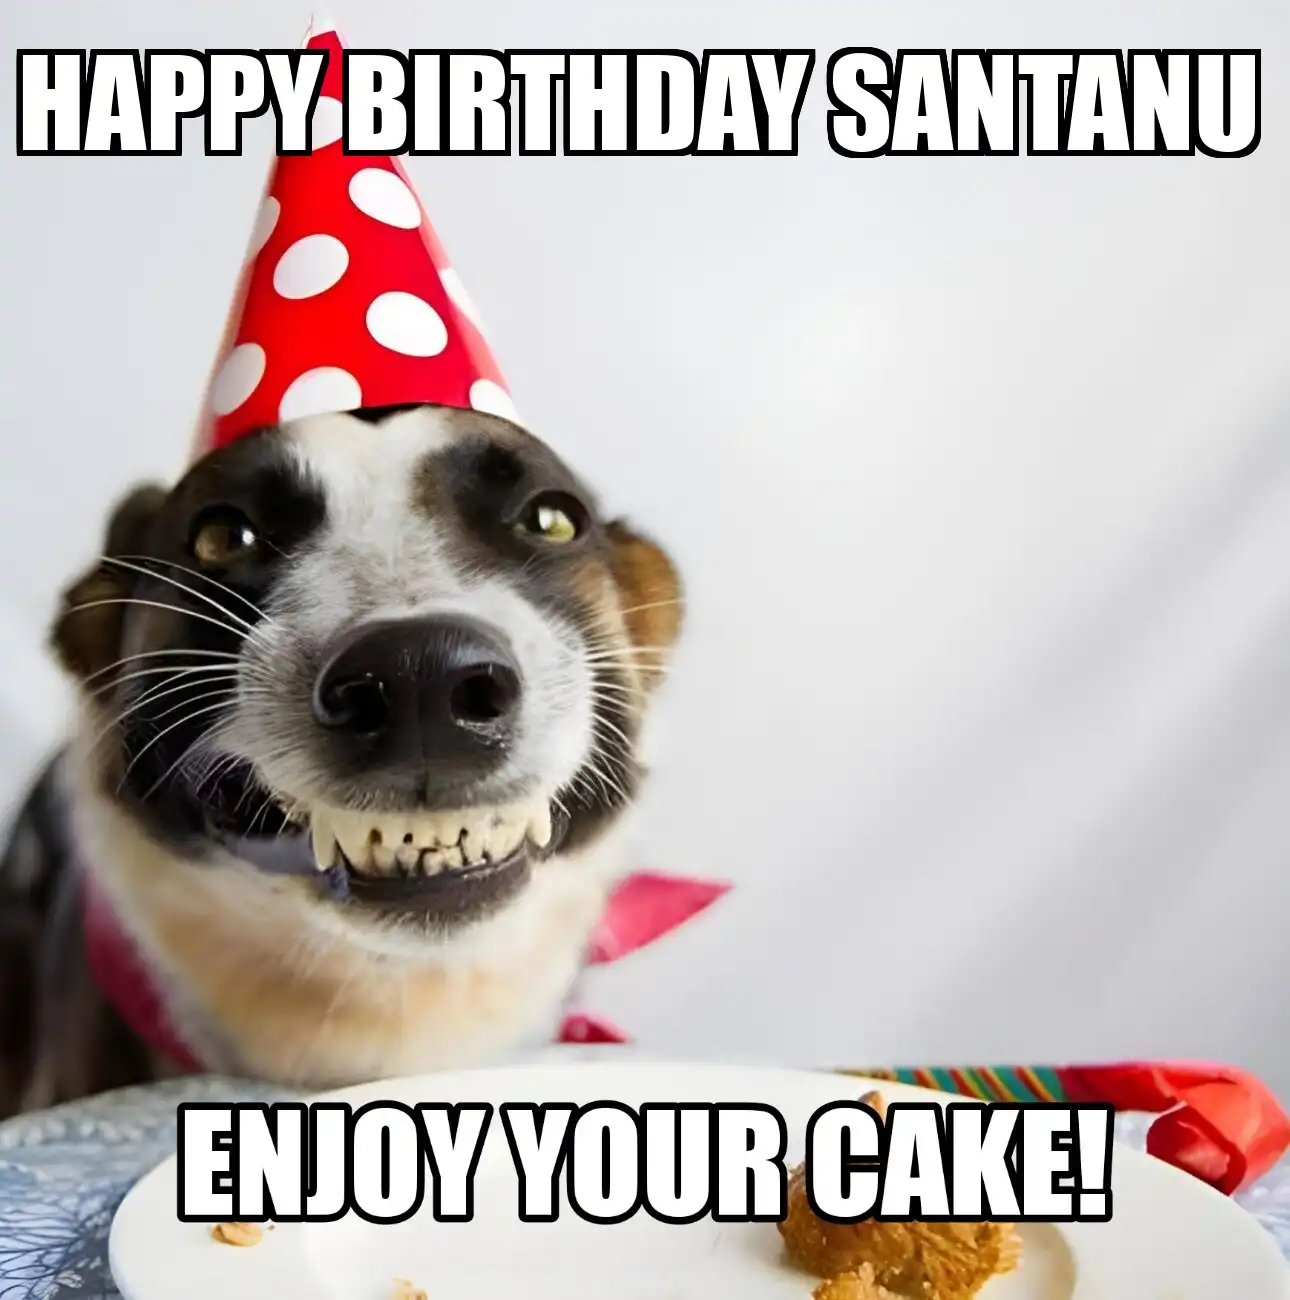 Happy Birthday Santanu Enjoy Your Cake Dog Meme